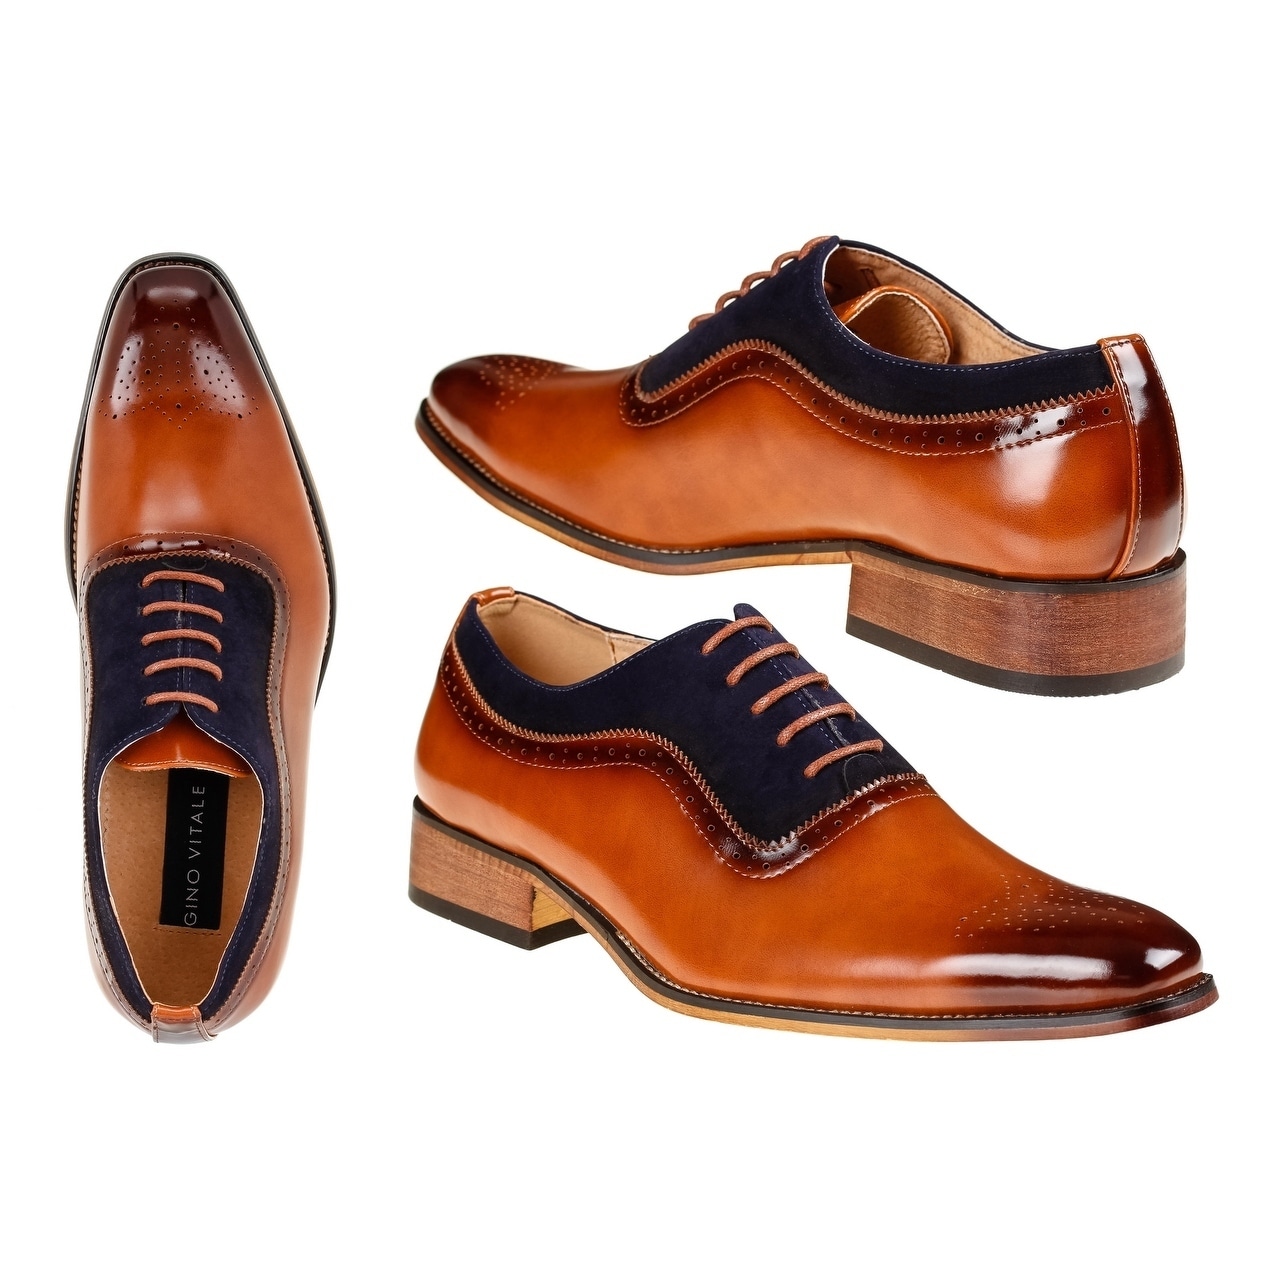 gino vitale men's dress shoes